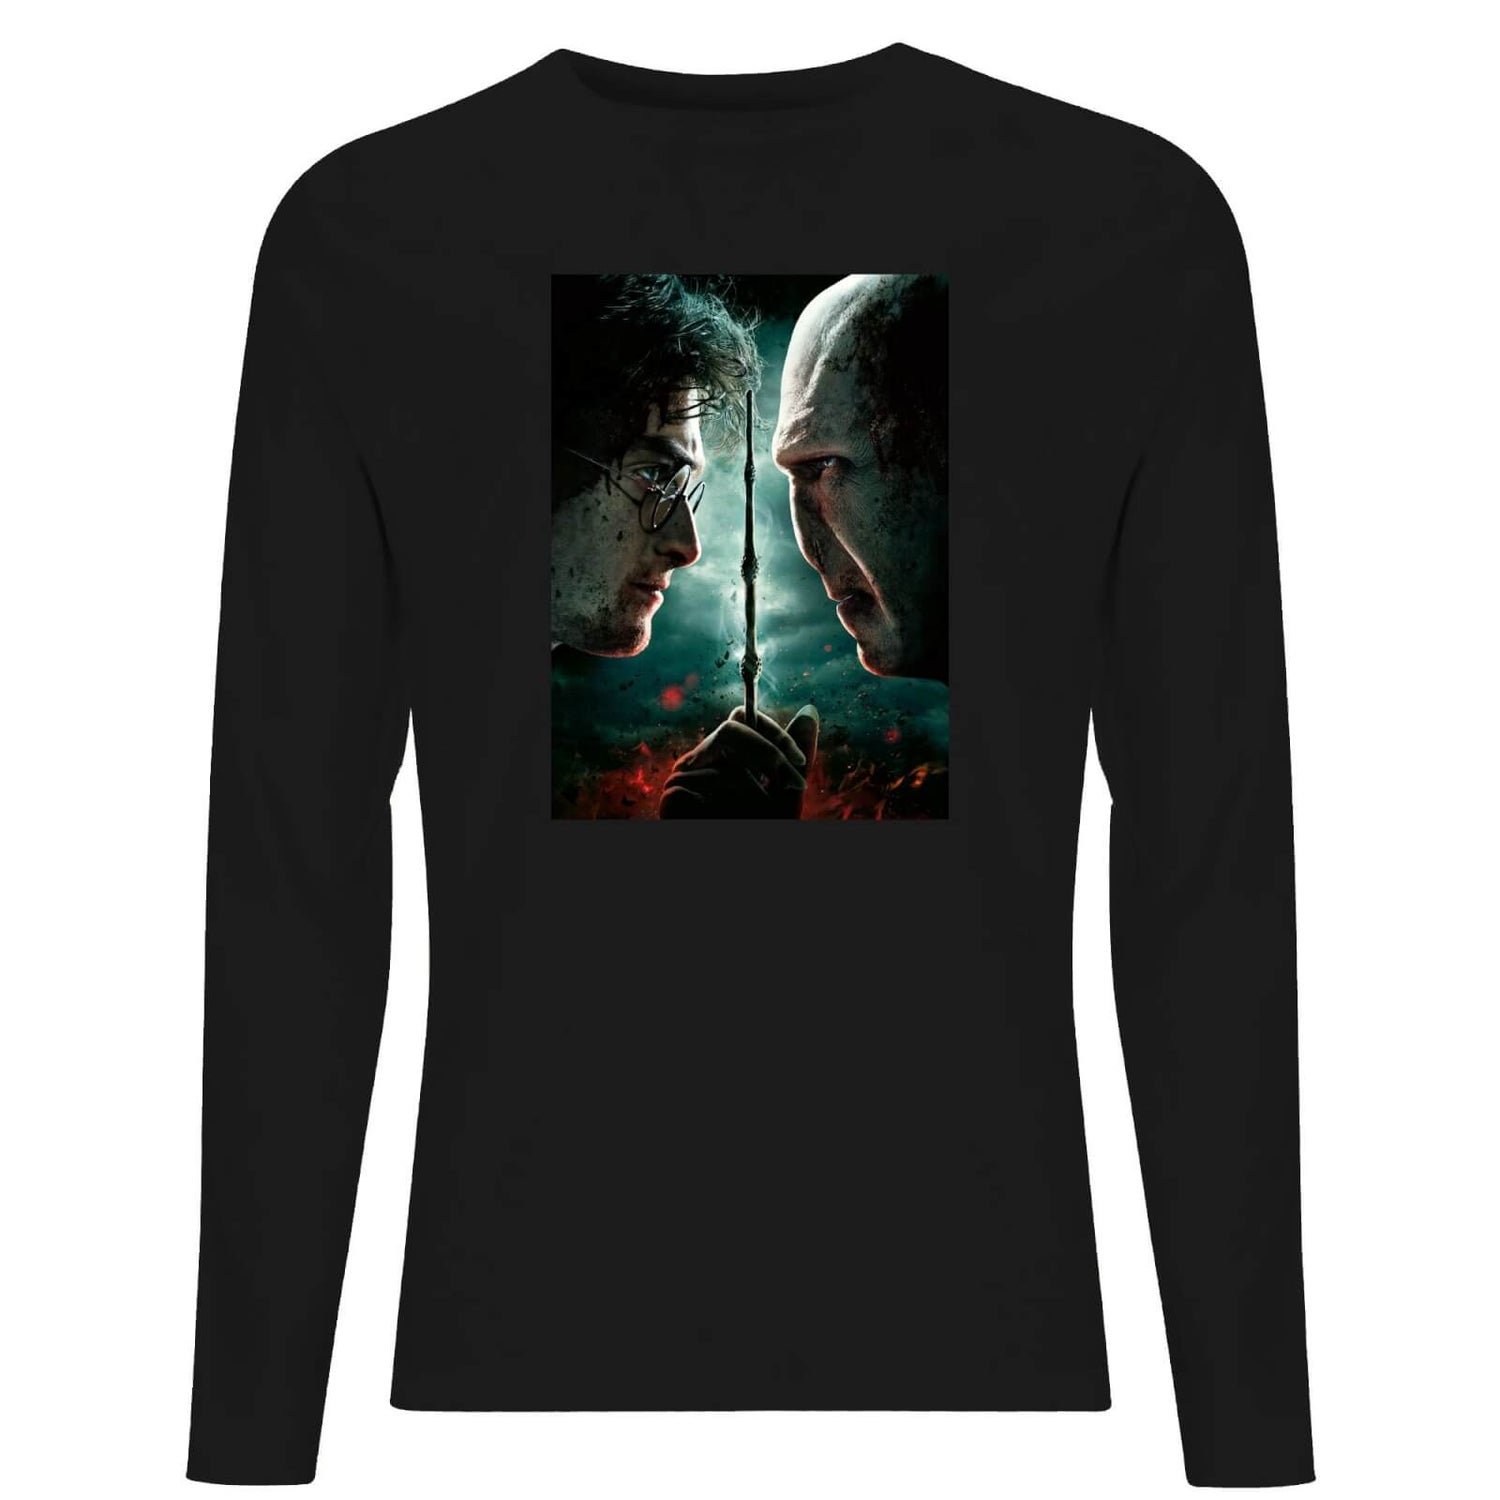 Harry Potter Deathly Hallows - Part 2 Unisex Long Sleeve T-Shirt - Black